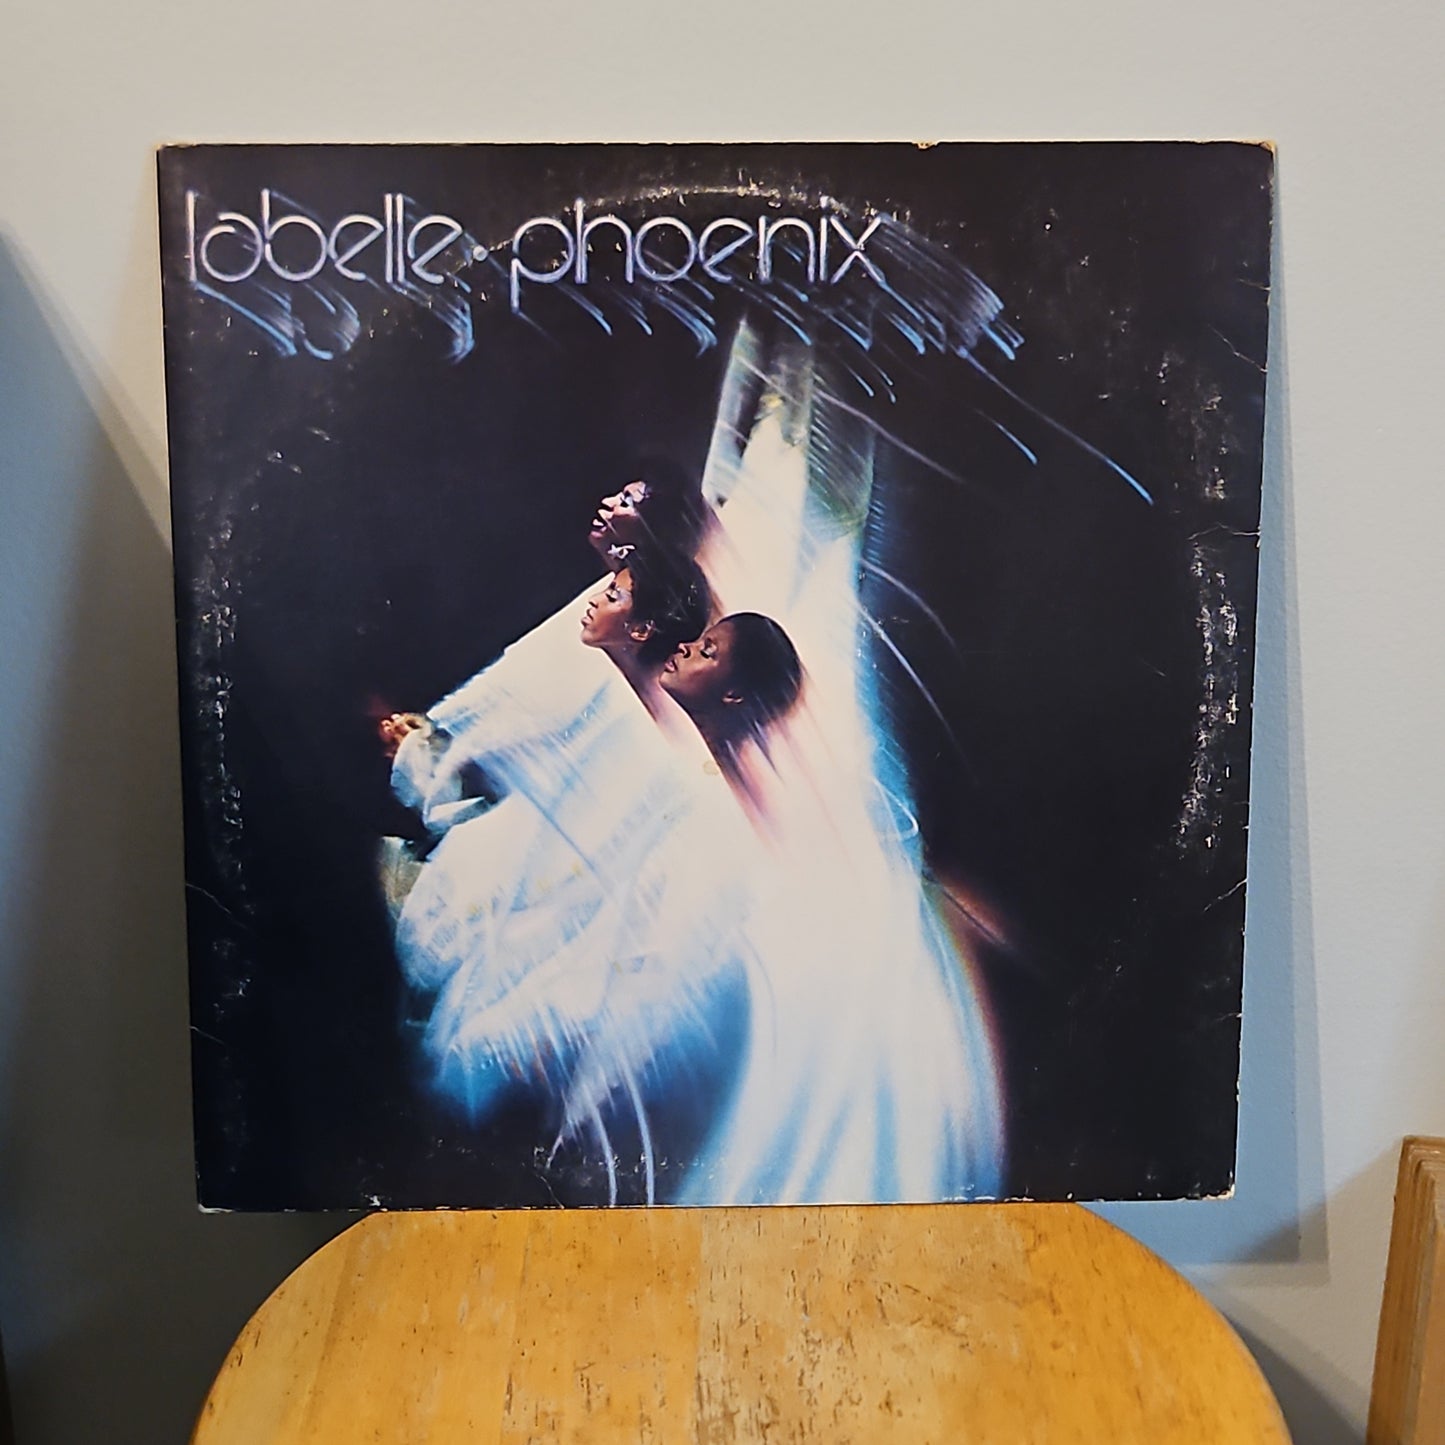 Lobelle Phoenix By Epic Records